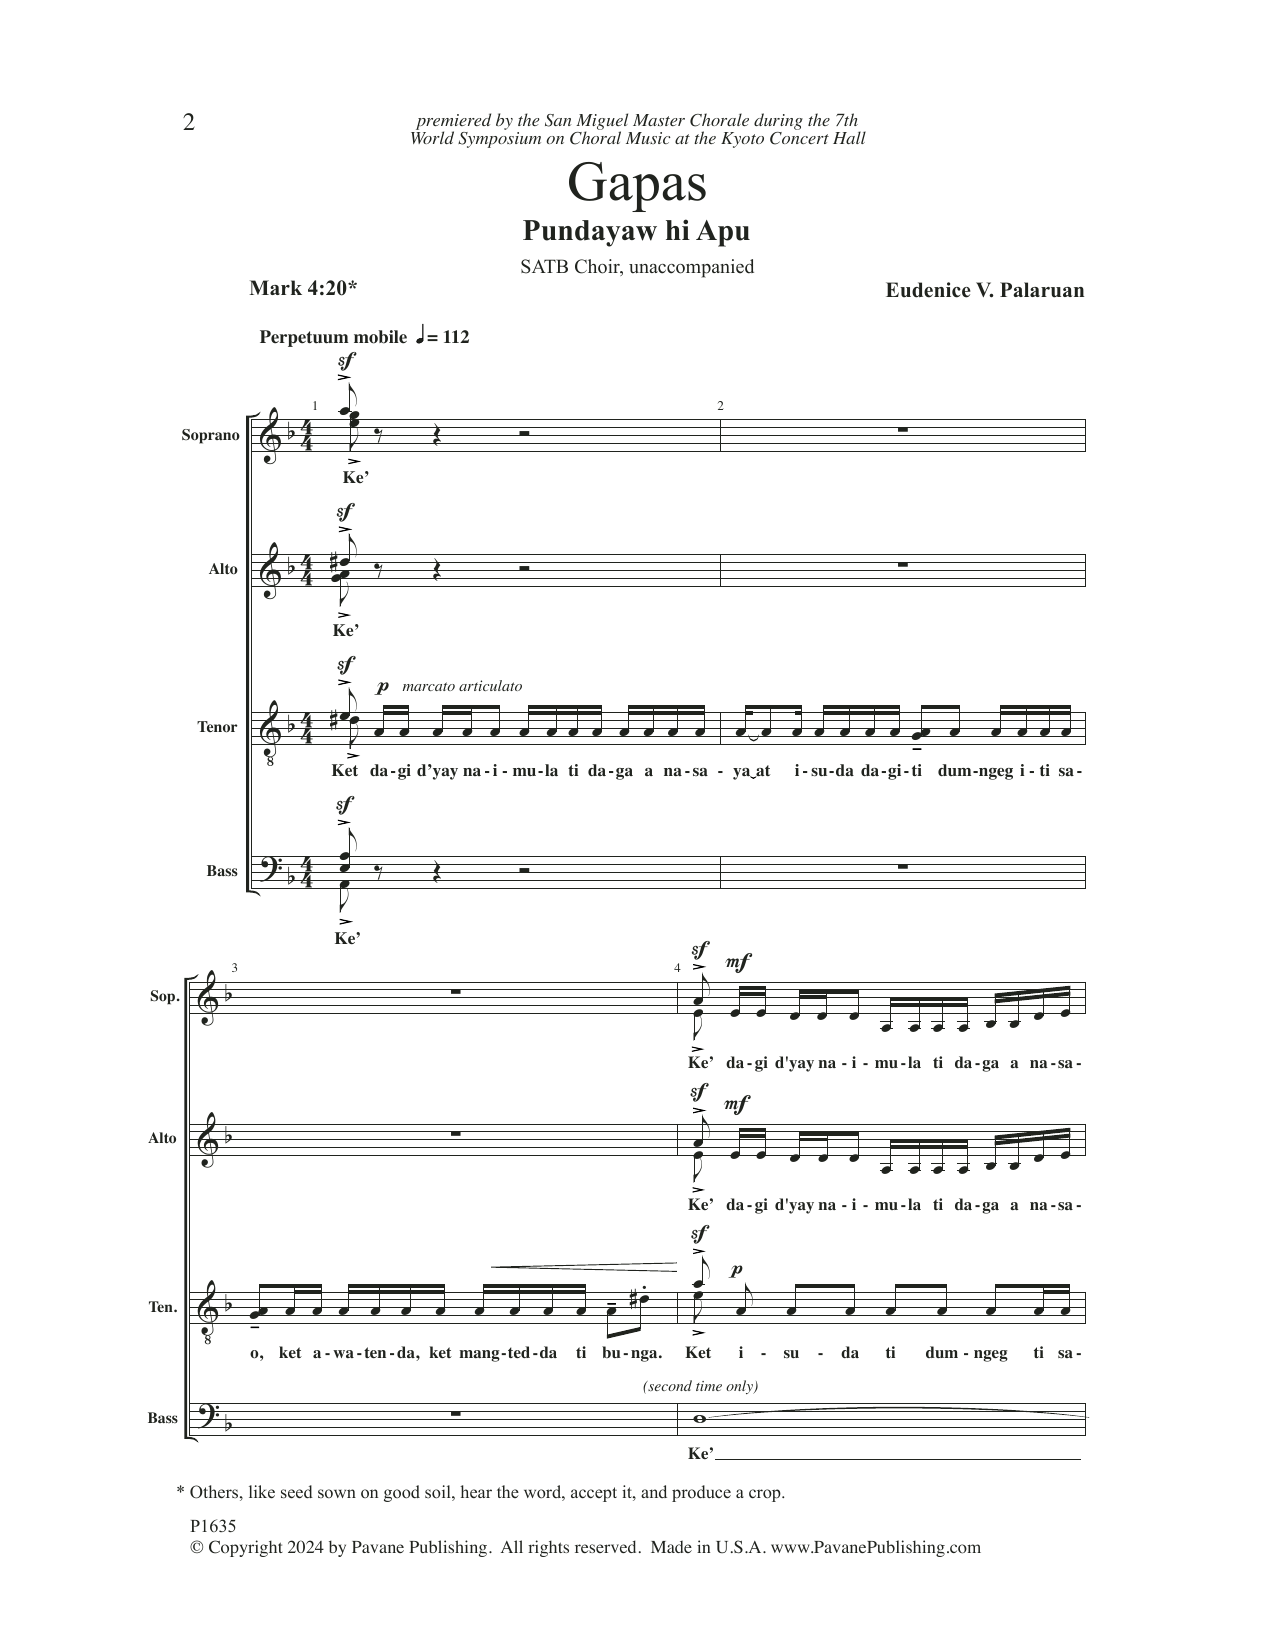 Download Eudenice V. Palaruan Gapas (Pundayaw hi Apu) Sheet Music and learn how to play SATB Choir PDF digital score in minutes